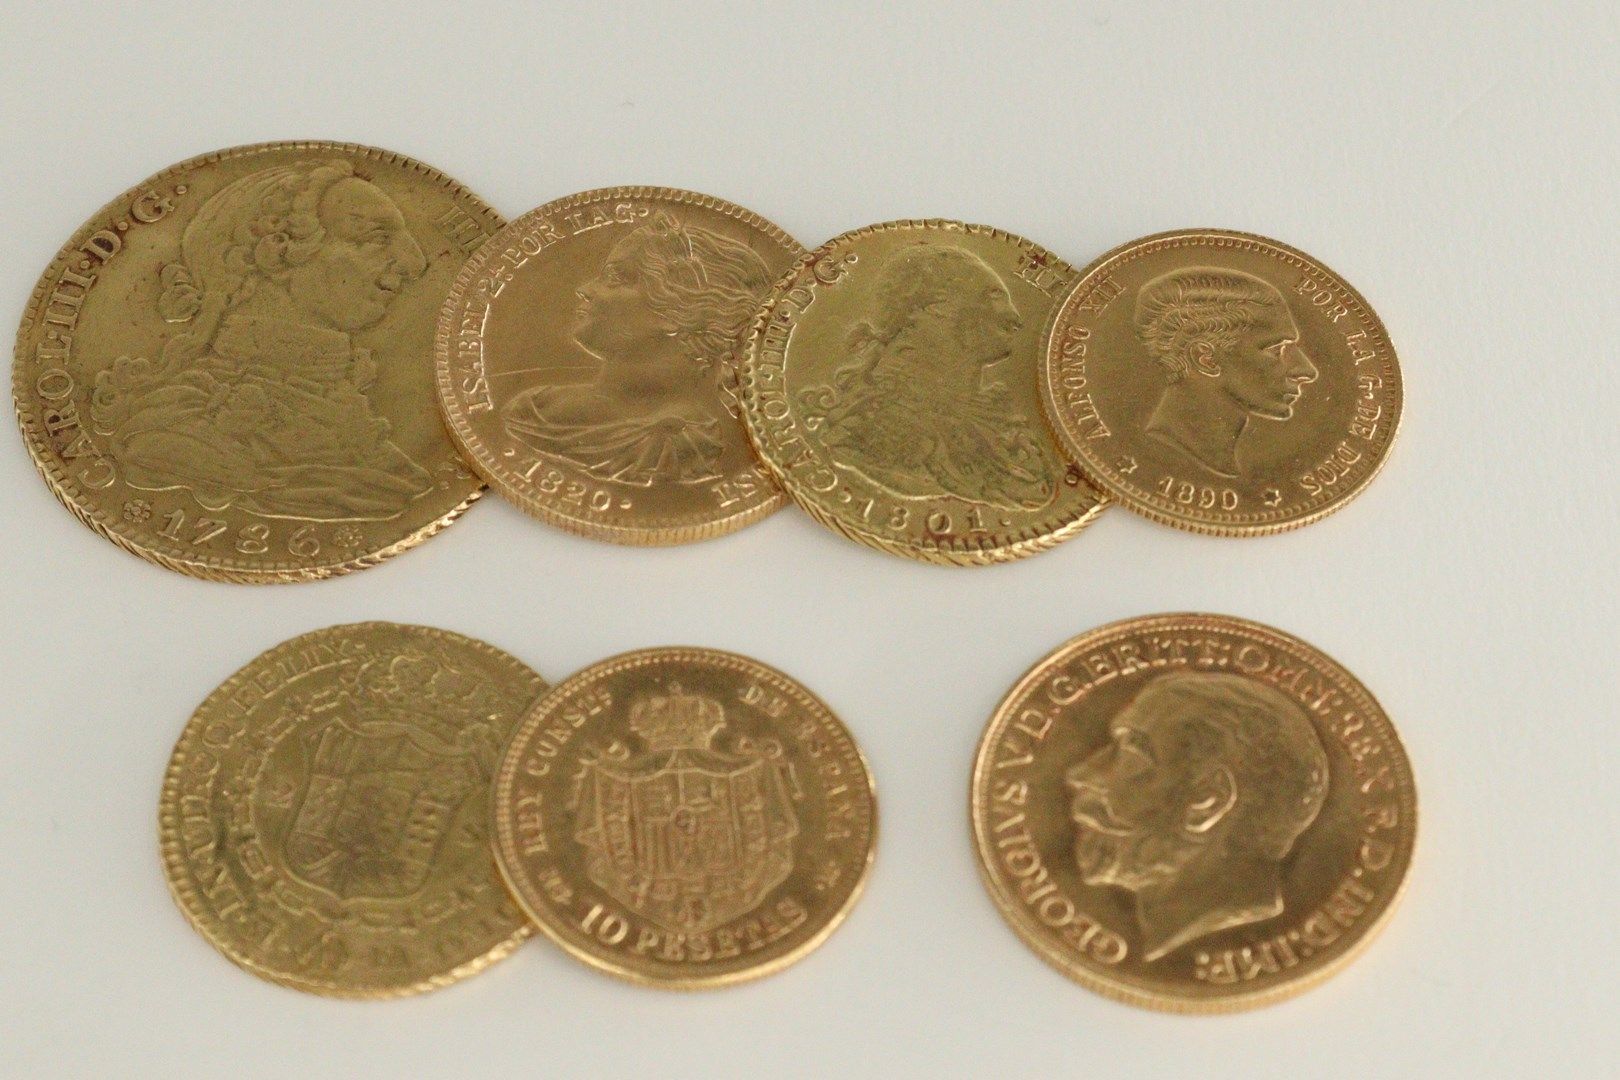 Null 一批仿制的金币包括:

- 4枚查理三世埃斯库多的复制品之一

- 2枚查理三世埃斯库多的复制品

- 一个乔治五世主权的复制品

- 伊莎贝尔二世1&hellip;